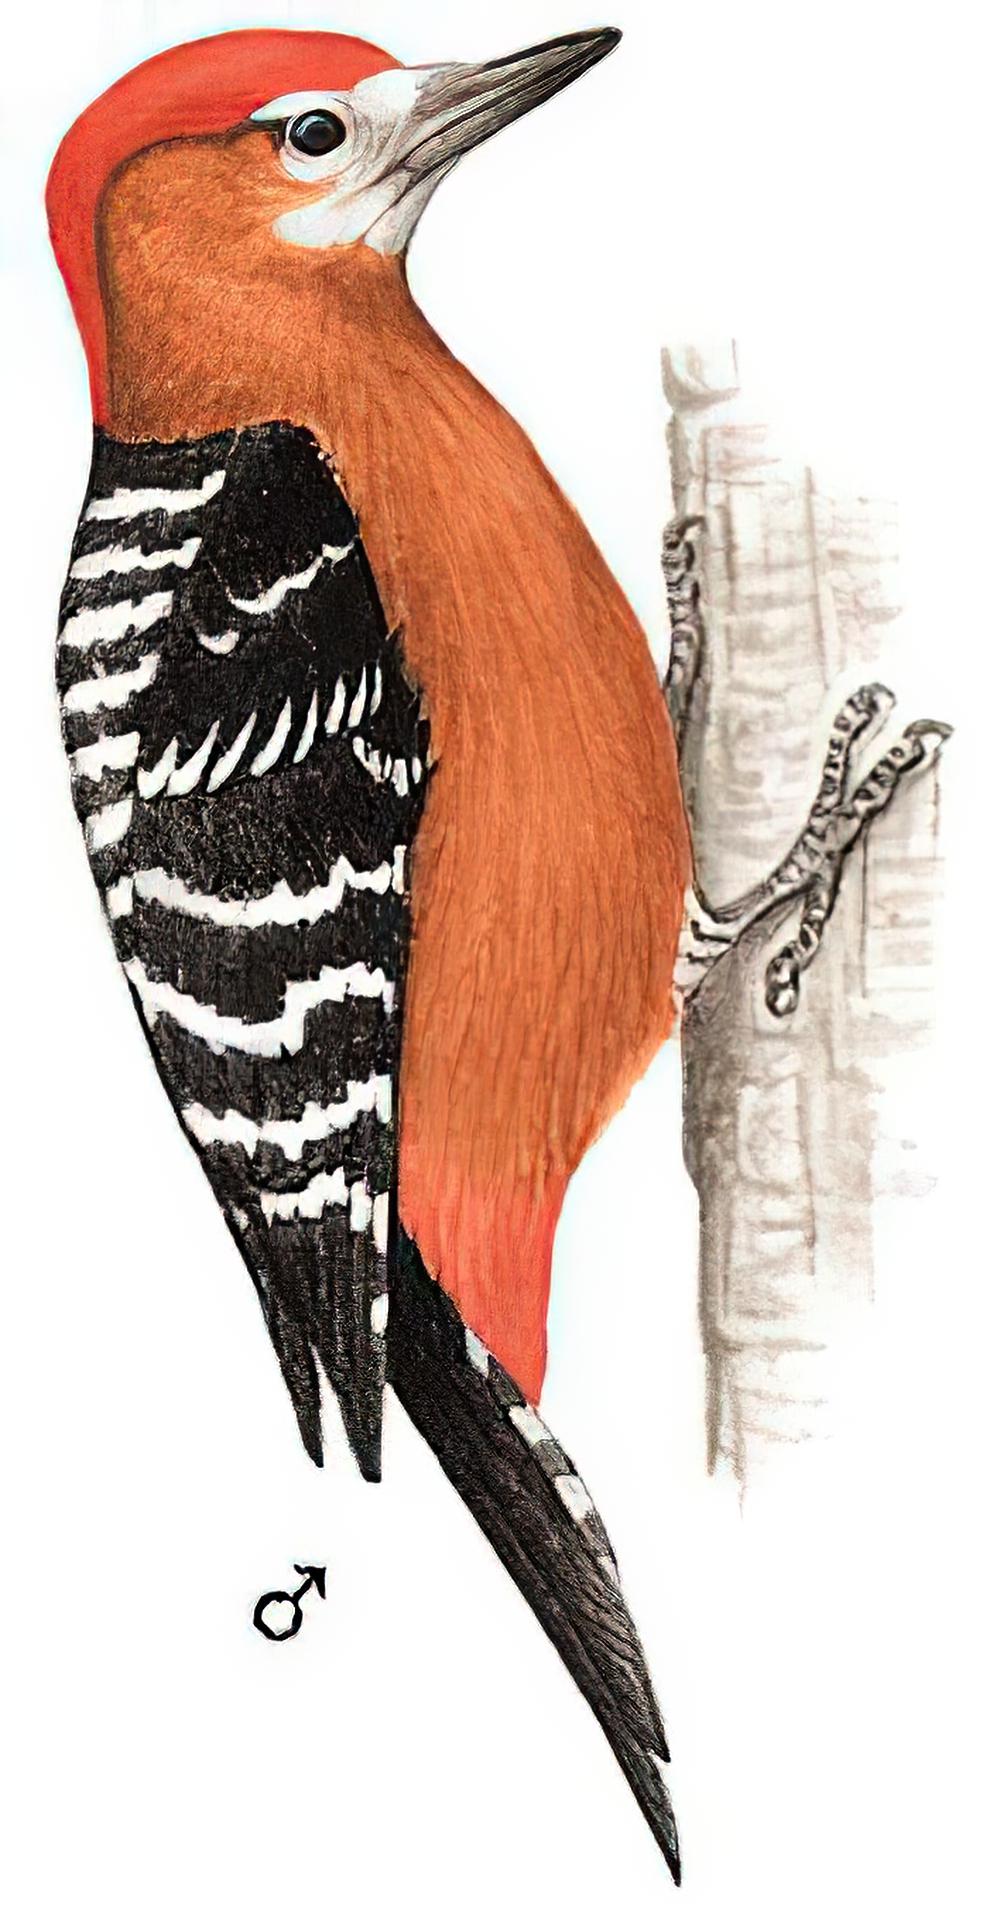 棕腹啄木鸟 / Rufous-bellied Woodpecker / Dendrocopos hyperythrus